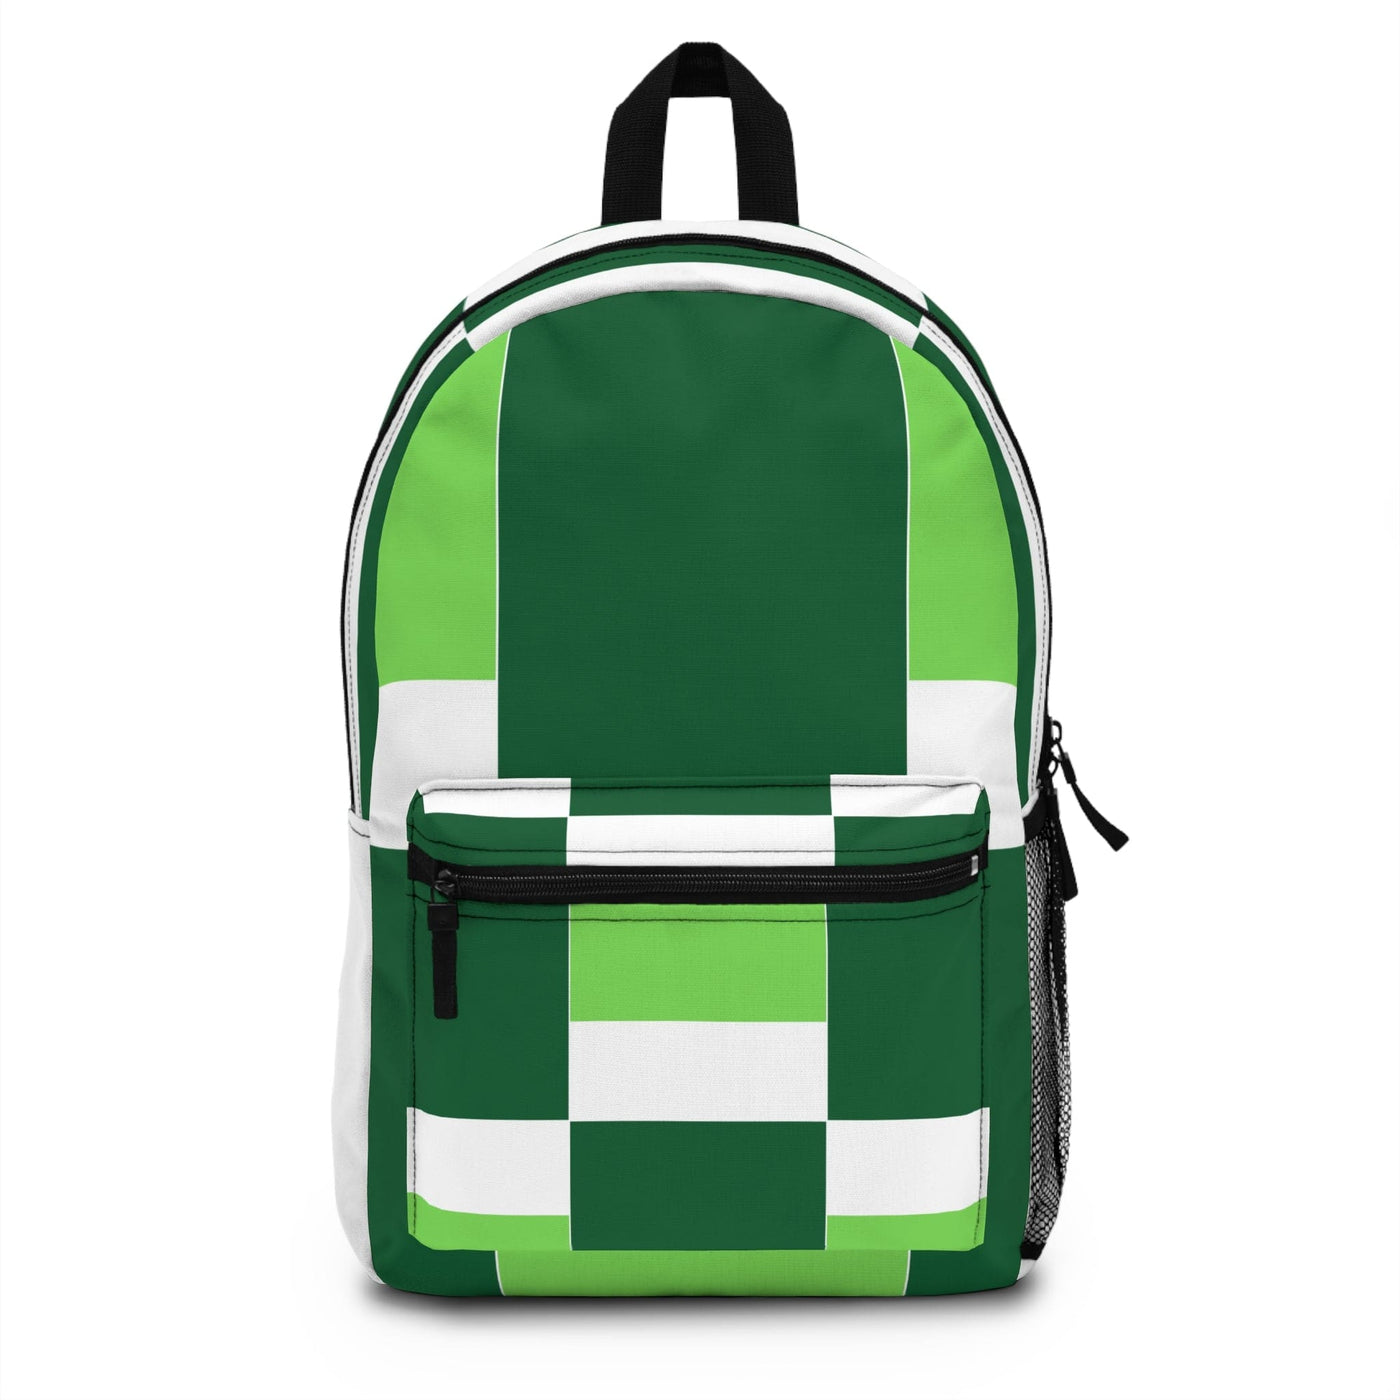 Backpack Work/school/leisure - Waterproof Lime Forest Irish Green Colorblock